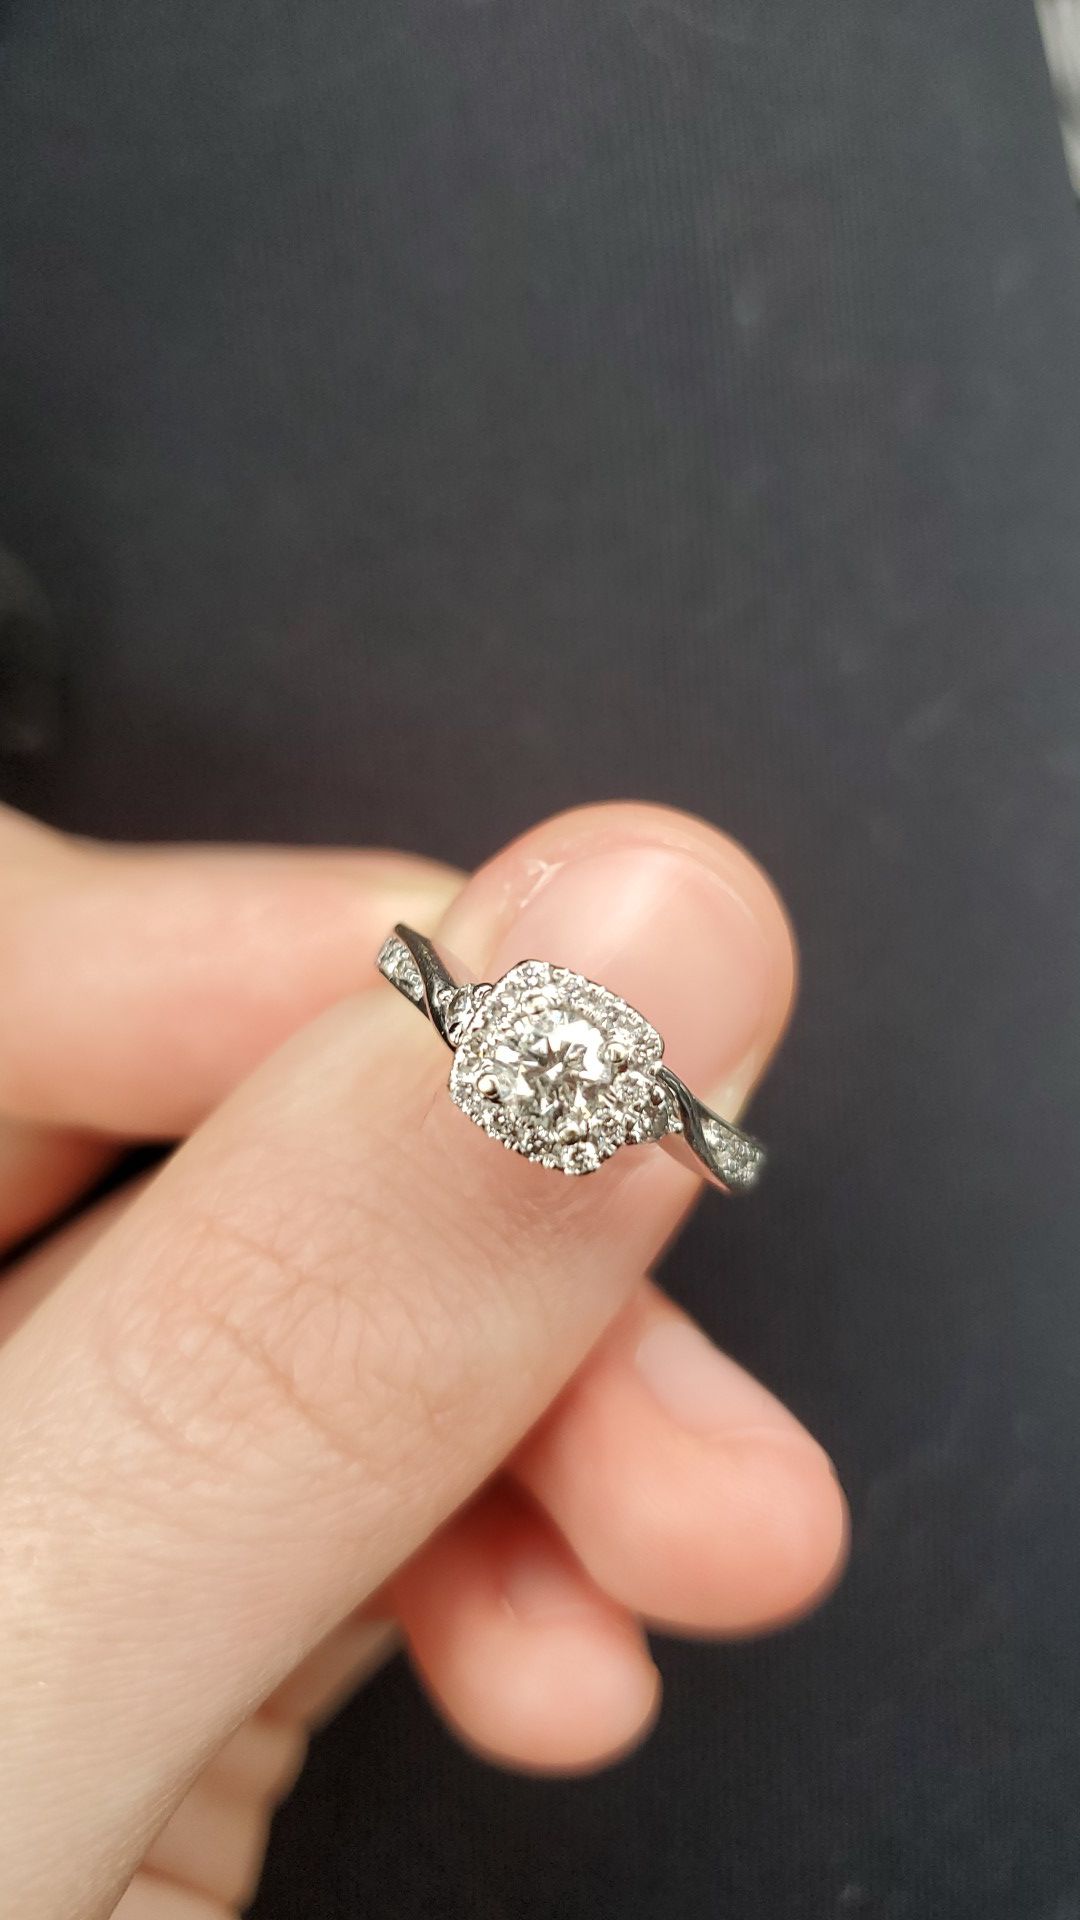 Women size 6 engagement ring